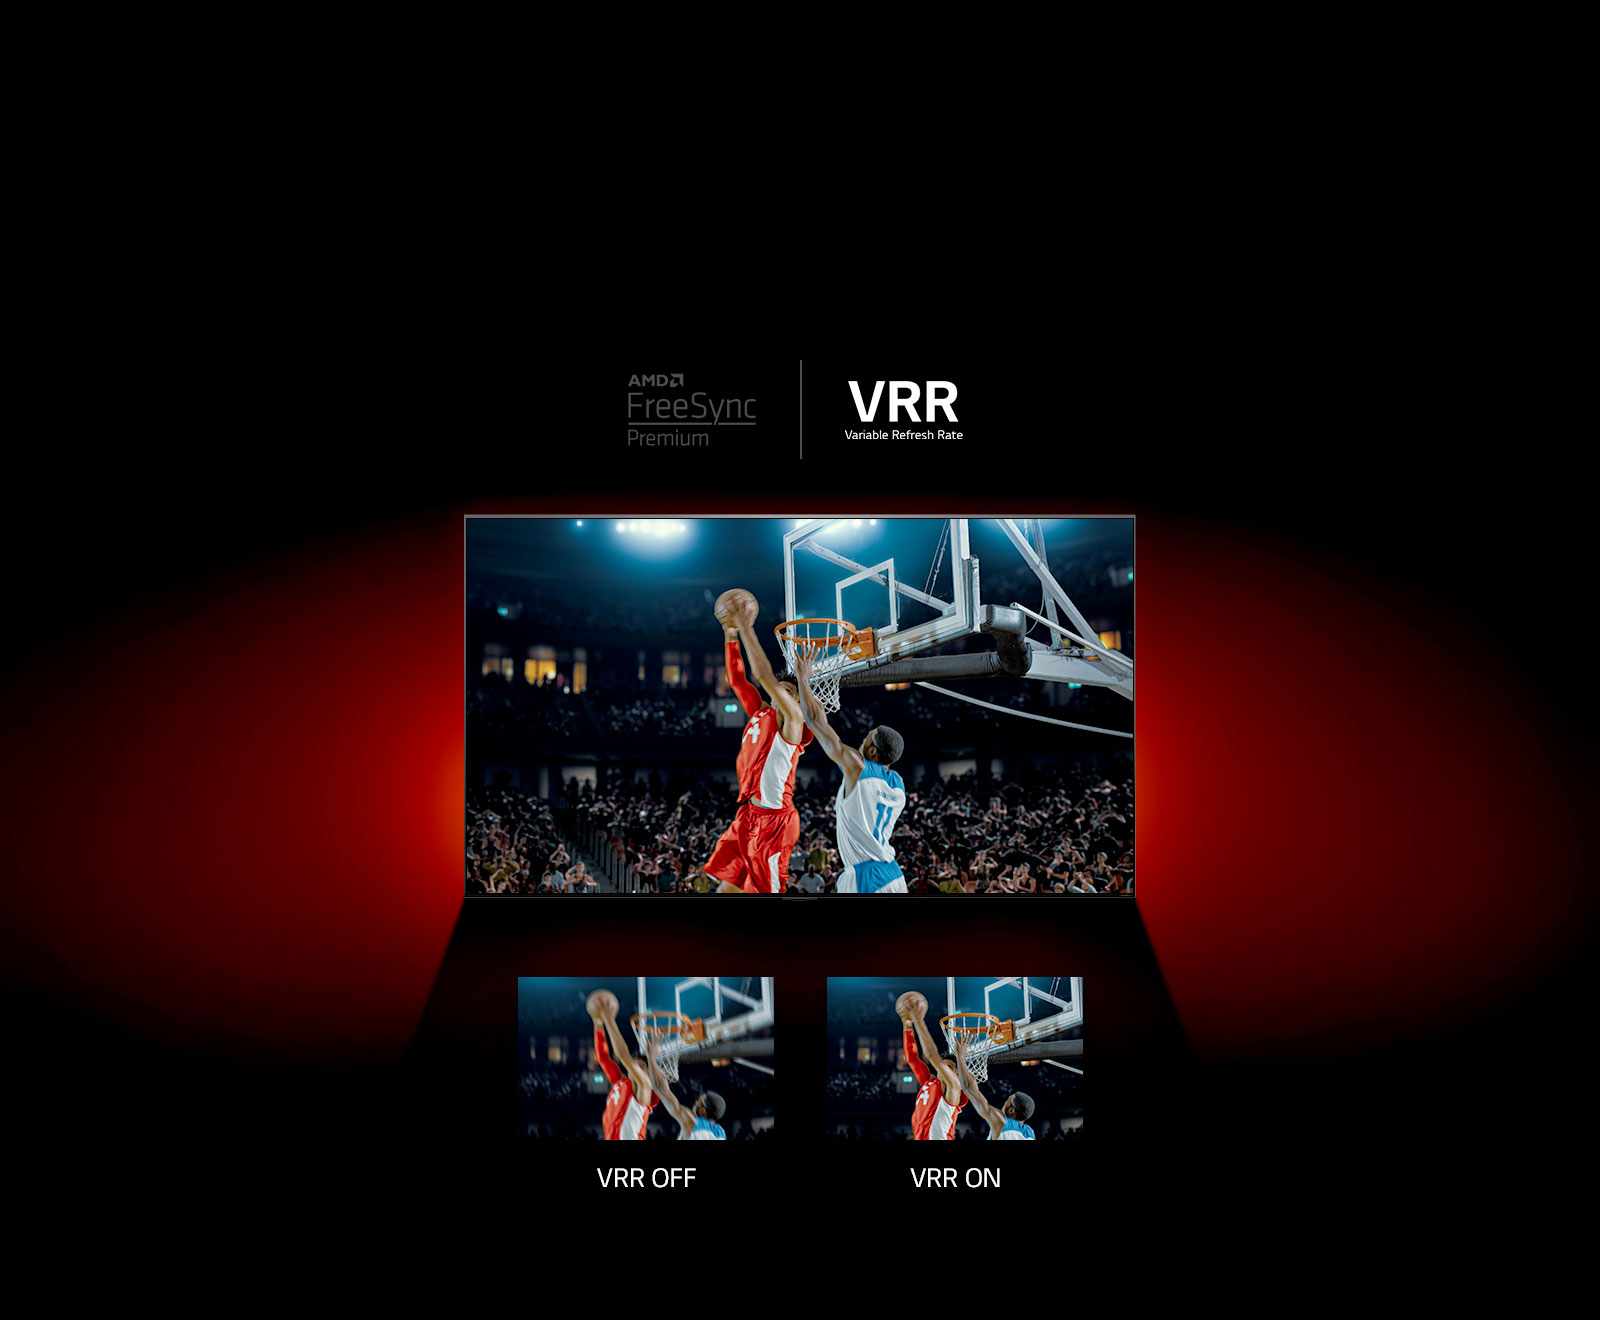 Anda dapat melihat TV Qned berdiri di depan dinding merah - gambar di layar menunjukkan pertandingan bola basket dengan dua pemain bermain. Tepat di bawah, Anda dapat melihat dua area gambar. Di sebelah kiri, kita dapat melihat teks VRR dan gambar kabur dari adegan yang sama, sementara di sebelah kanan, kita dapat melihat teks VRR pada dan gambar yang sama